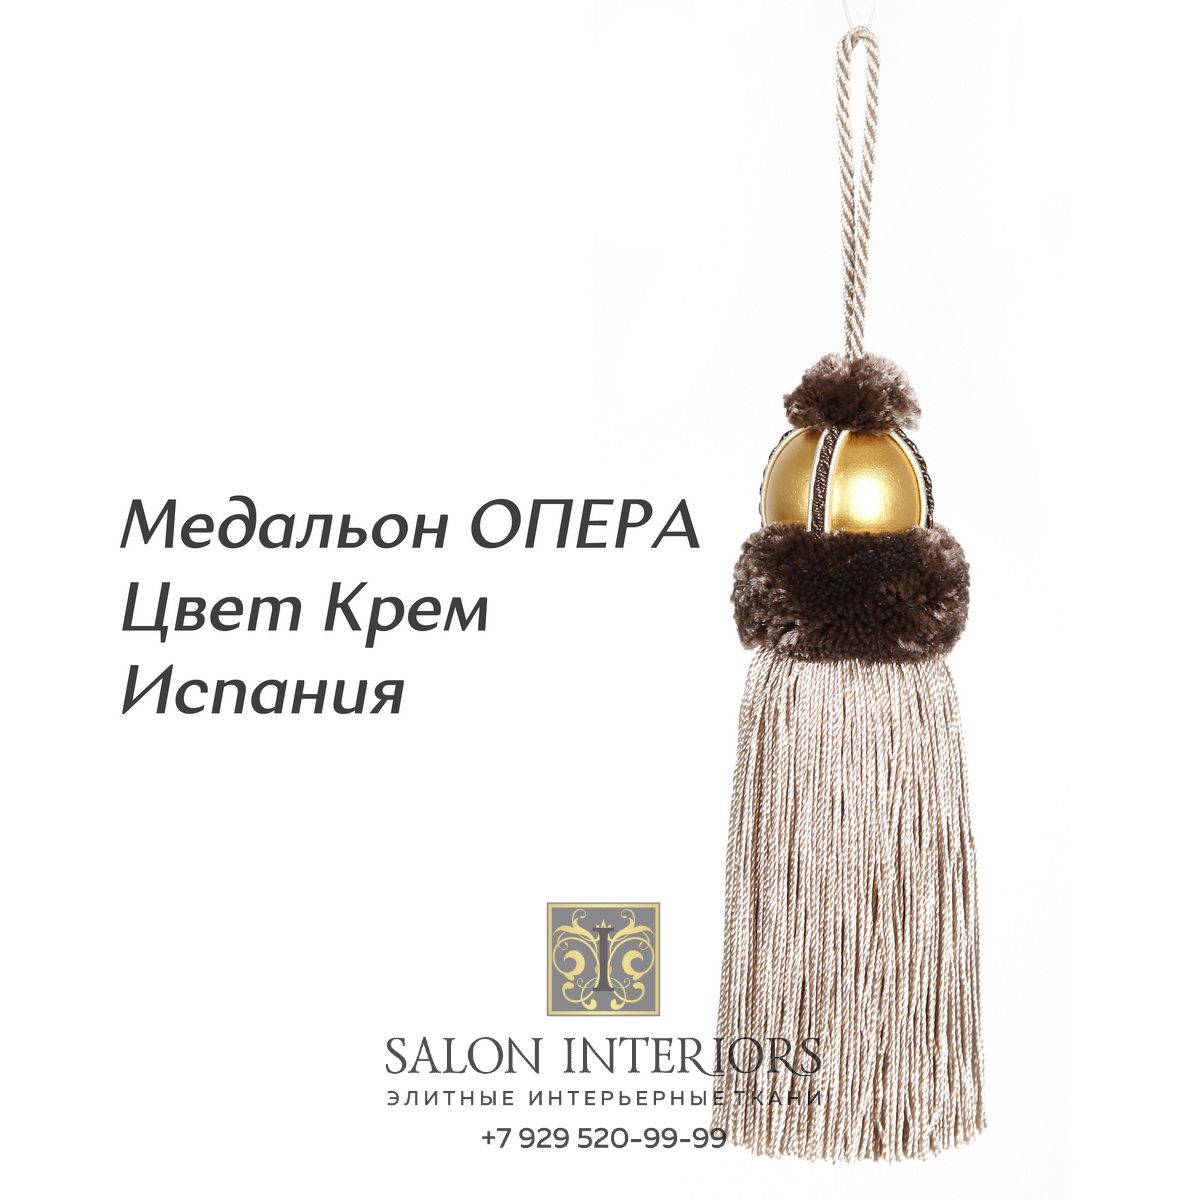 Медальон "ОПЕРА" Арт MK991-1893-A Цвет Крем разм.18см Испания